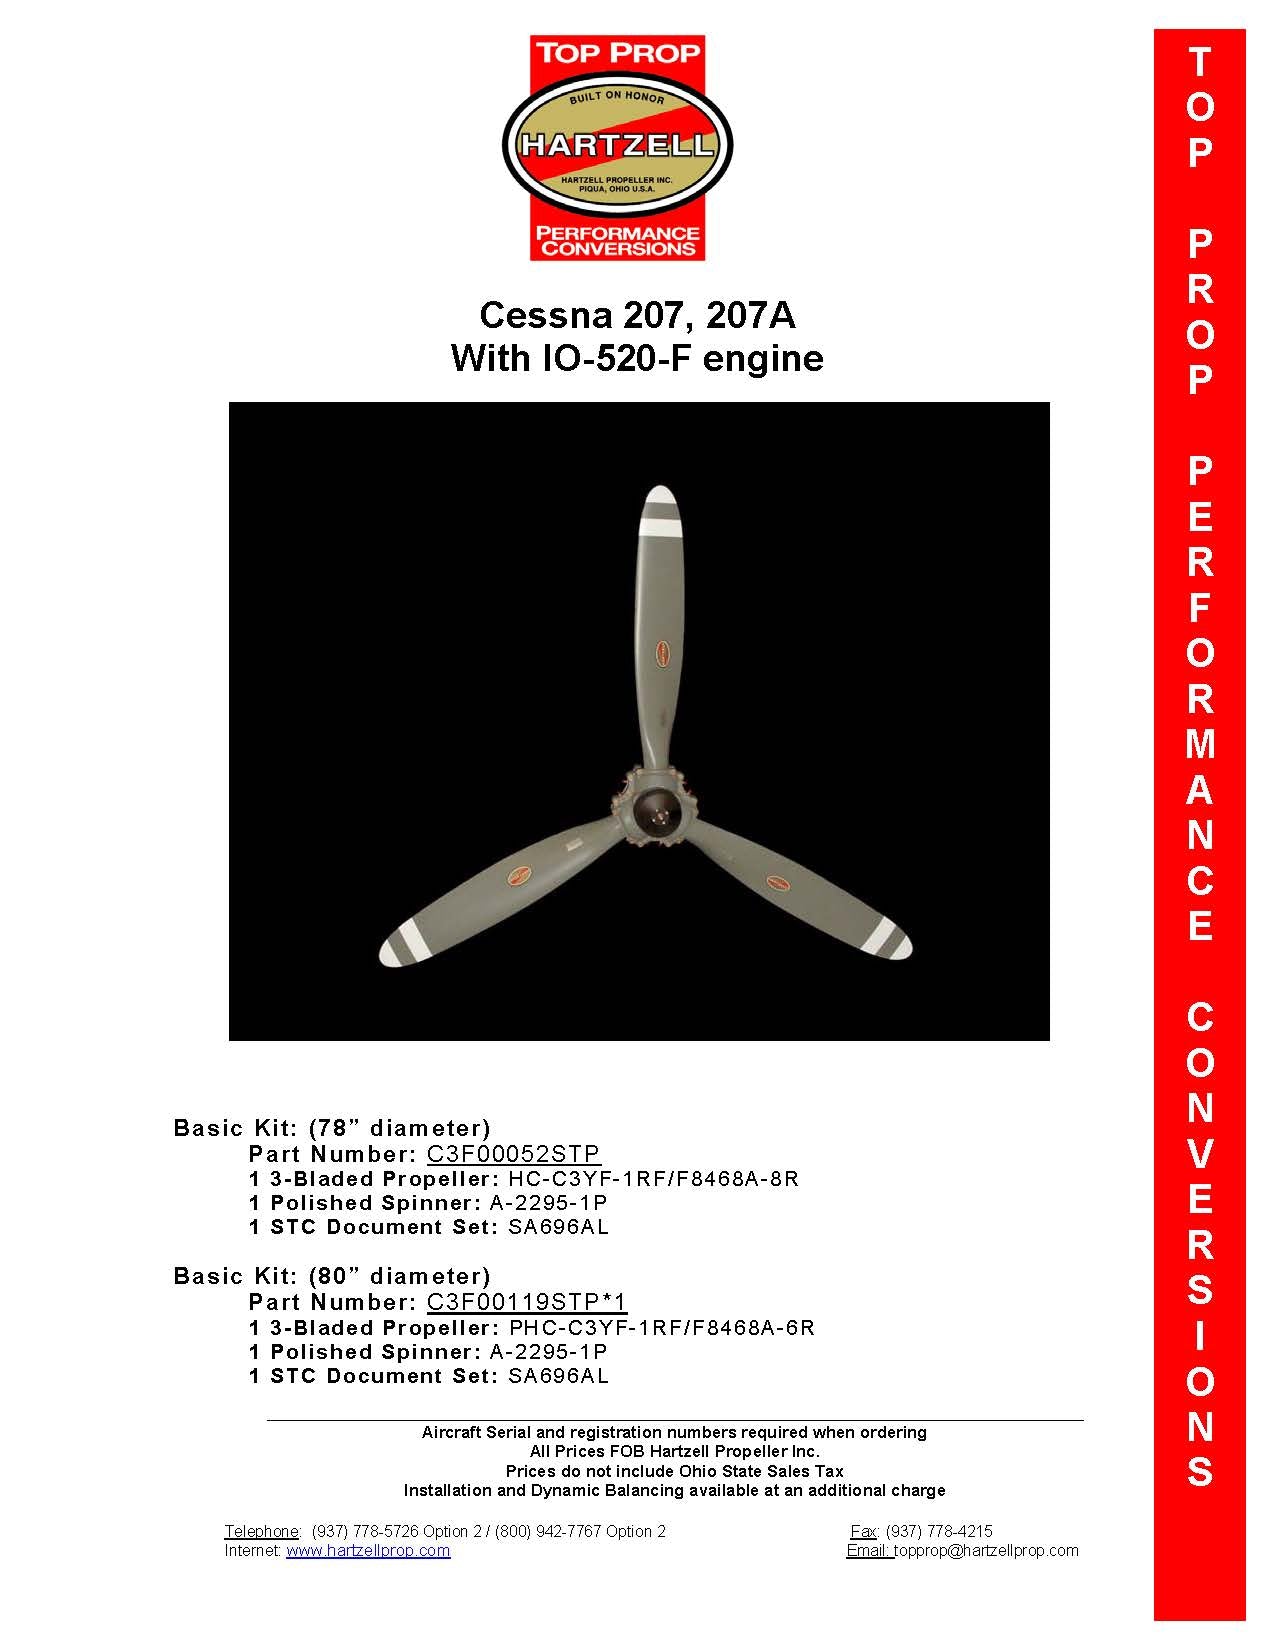 CESSNA-207-C3F00052STP-PAGE-1